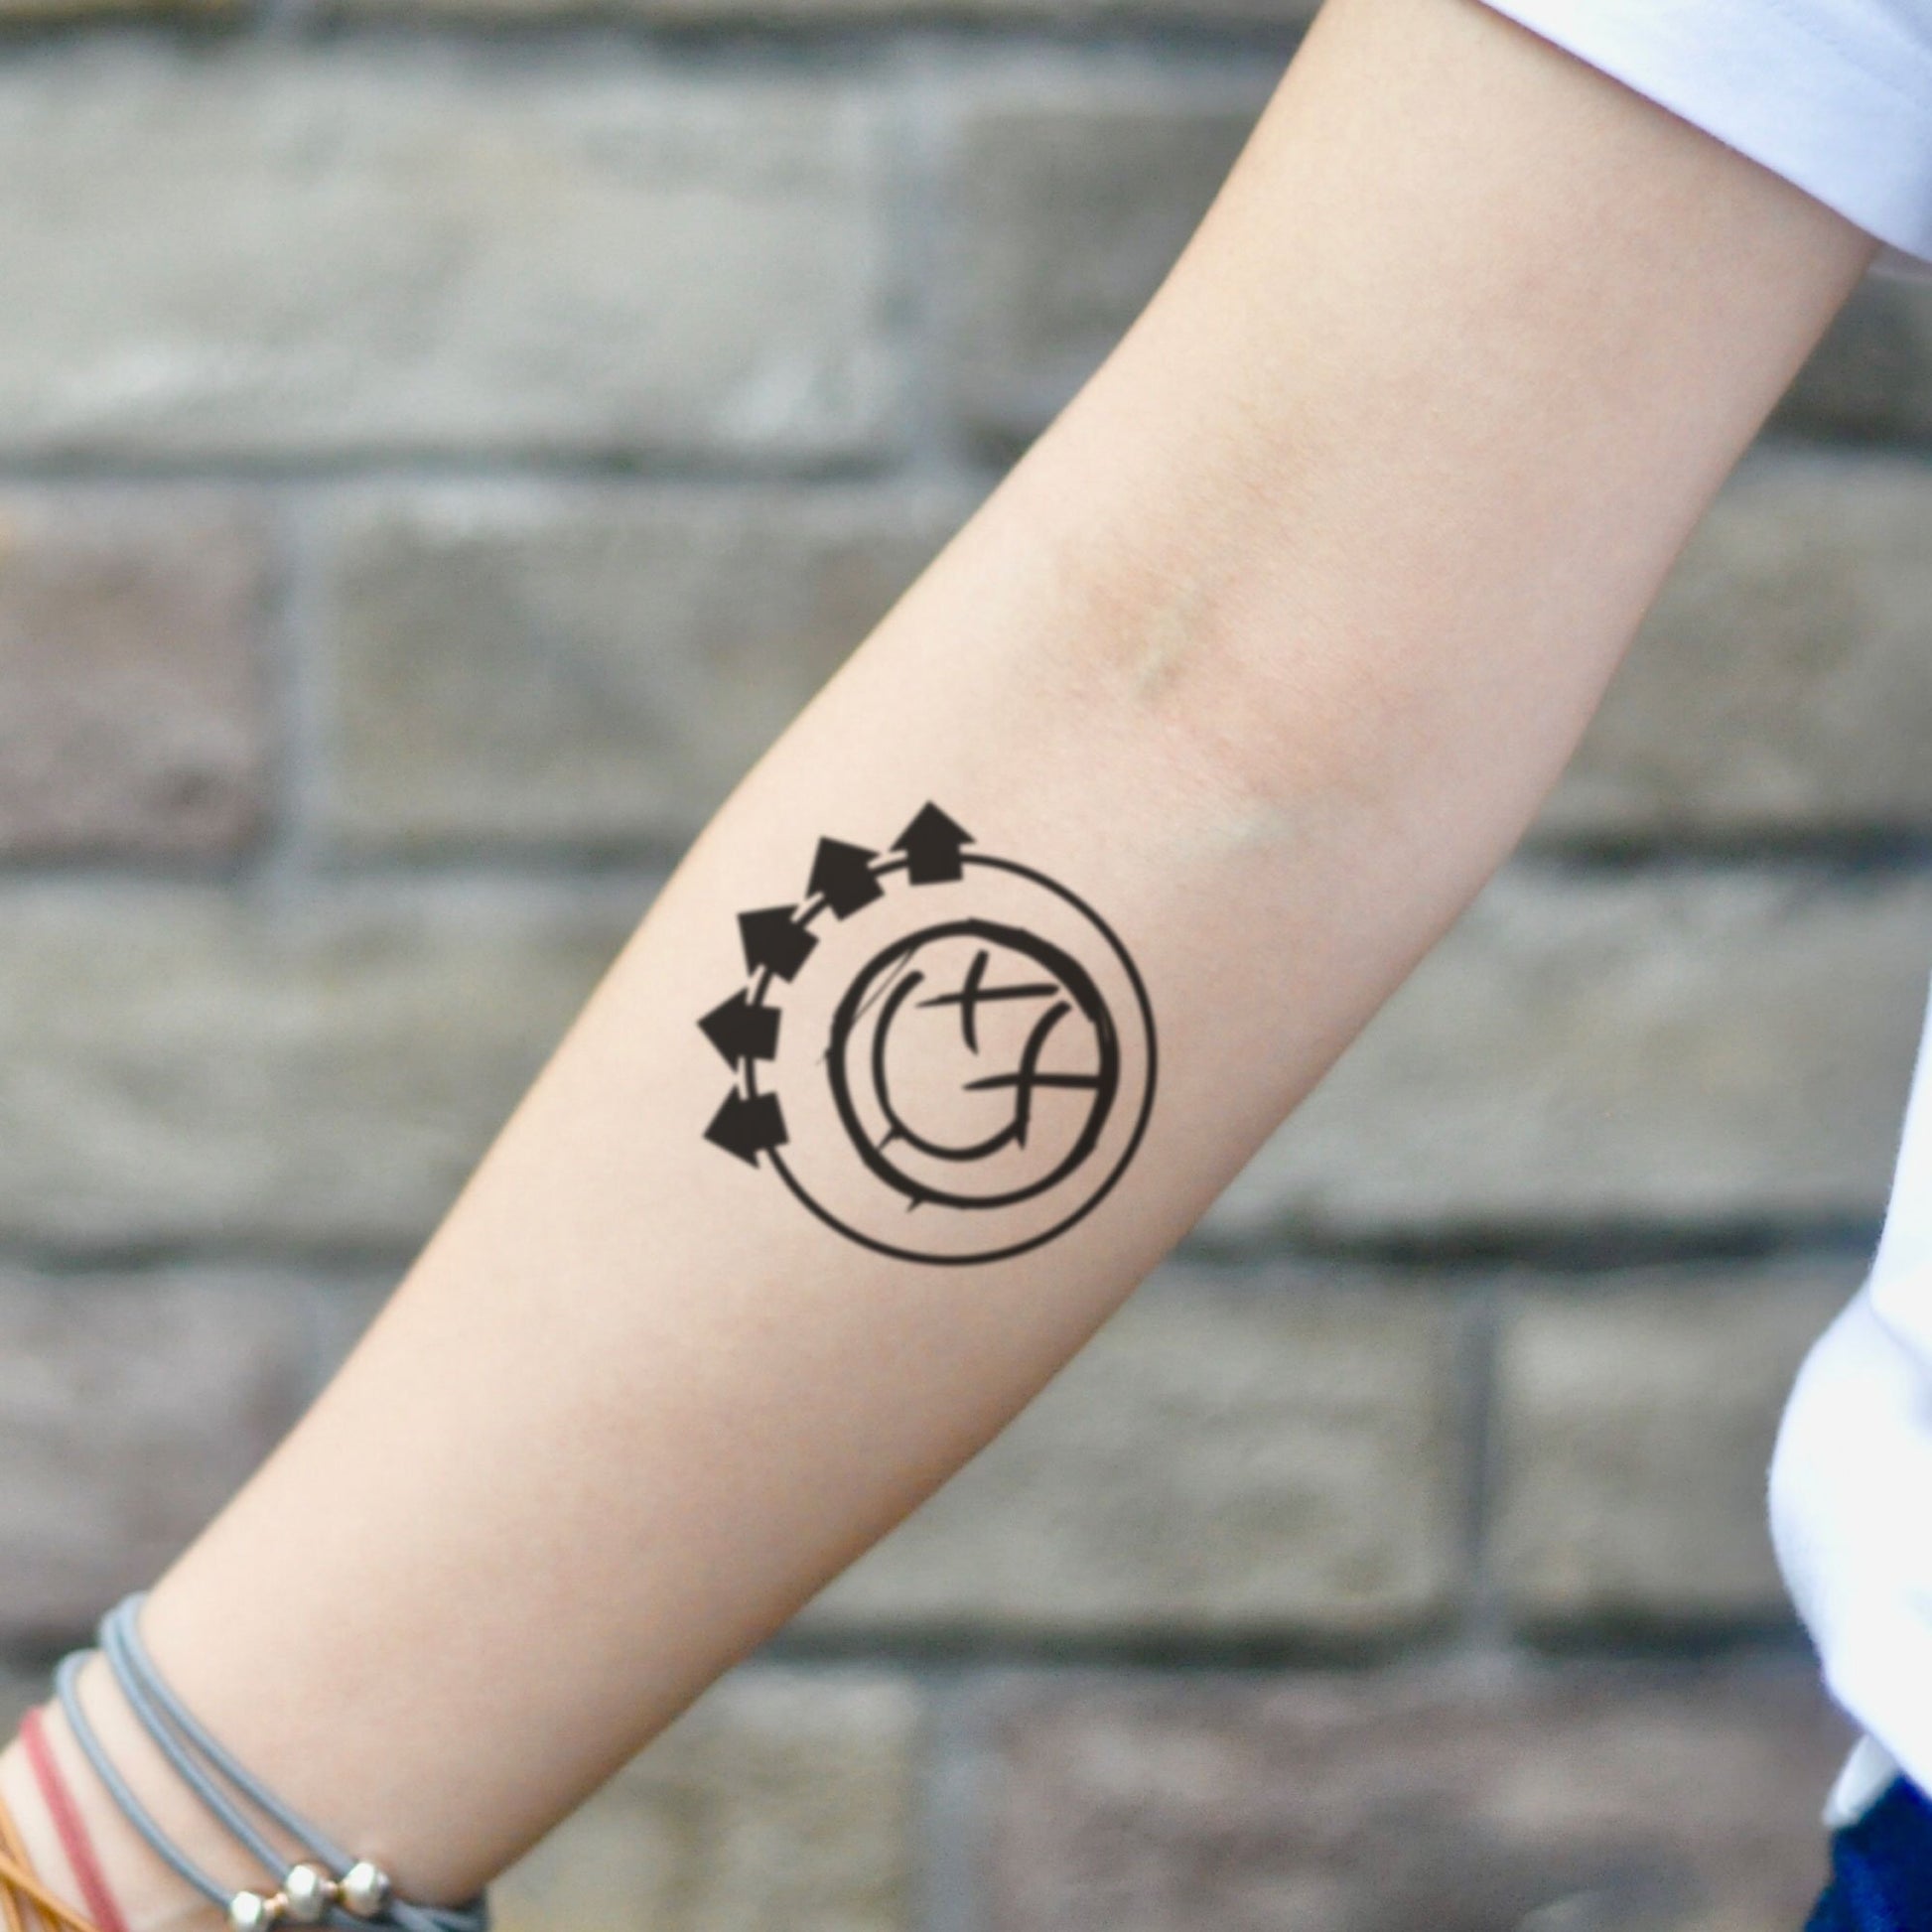 fake small blink 182 illustrative temporary tattoo sticker design idea on inner arm